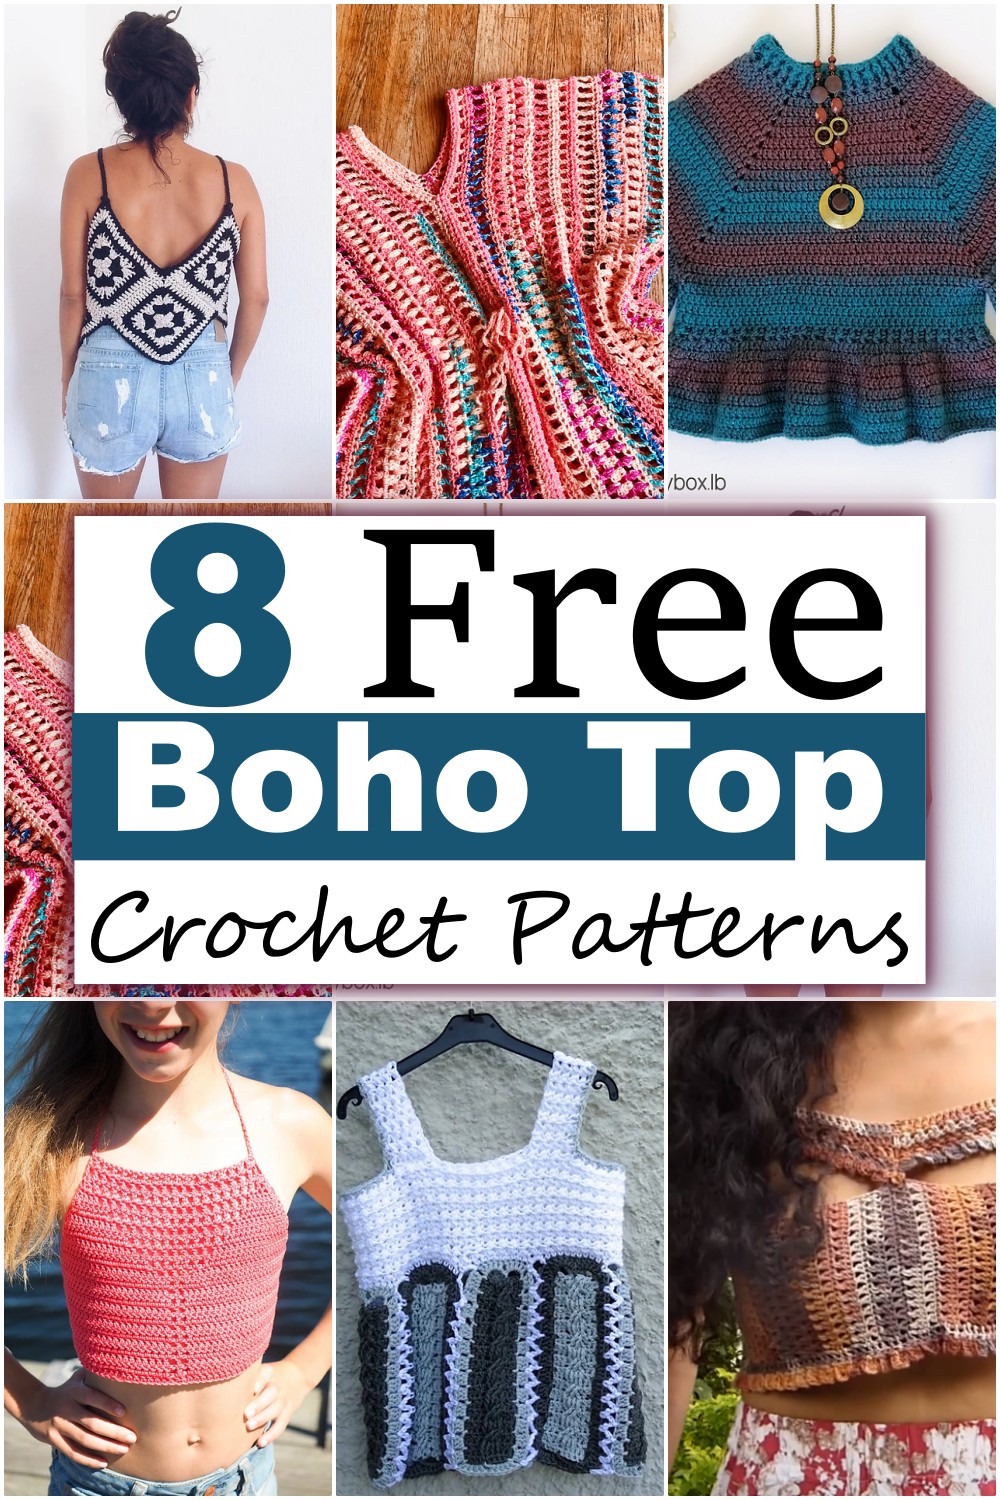 Boho Top Crochet Patterns